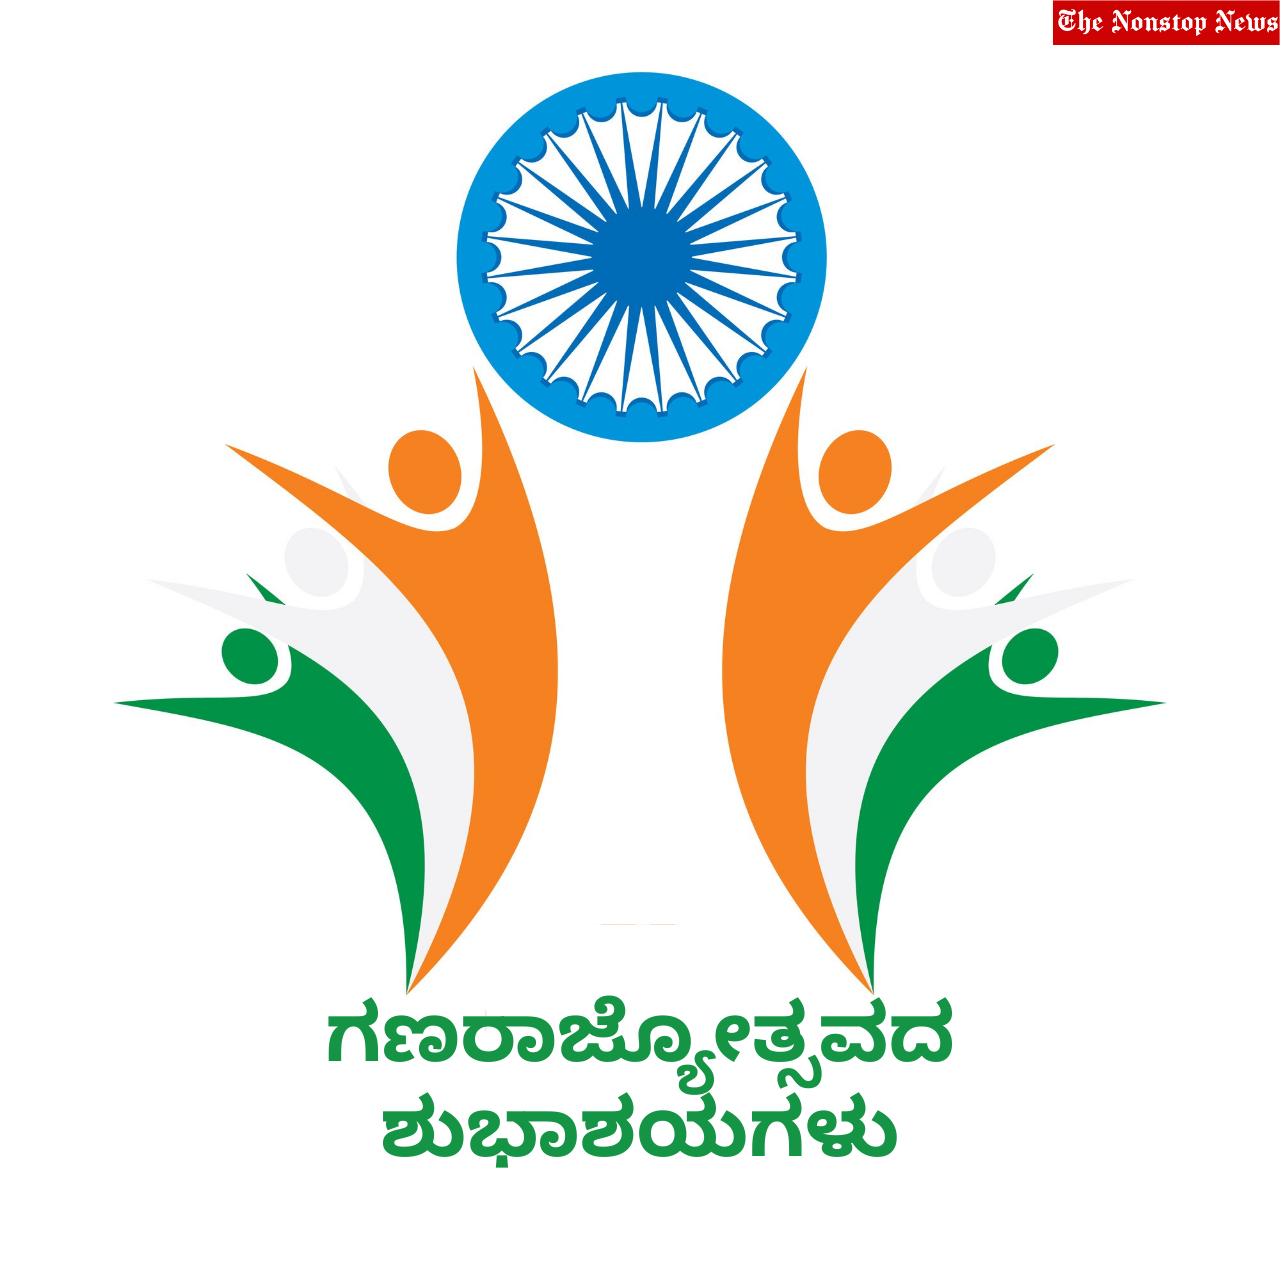 Indian Republic Day 2022: Kannada Greetings, HD Images, Messages, Quotes, HD Images, and Greetings to Share